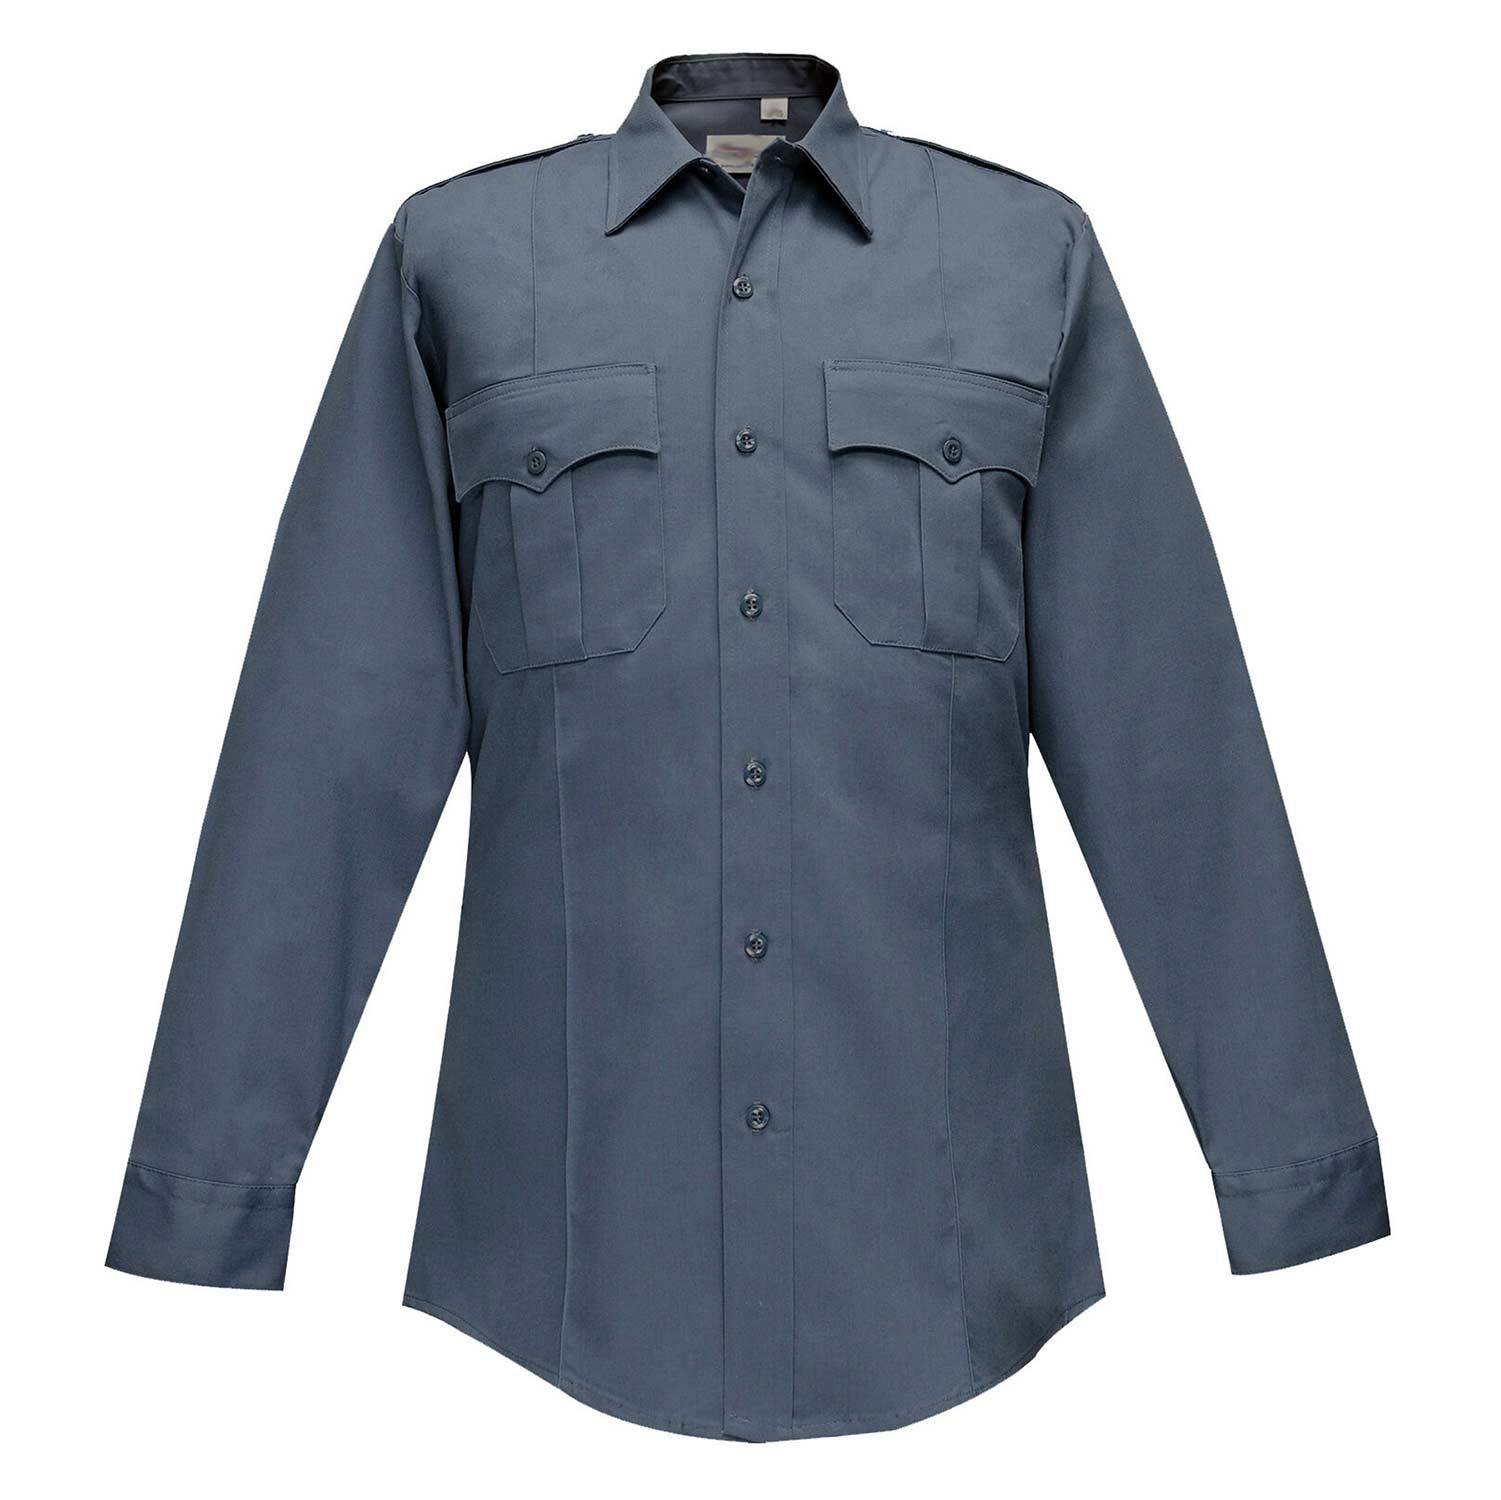 Flying Cross Men's Long Sleeve Uniform Shirt